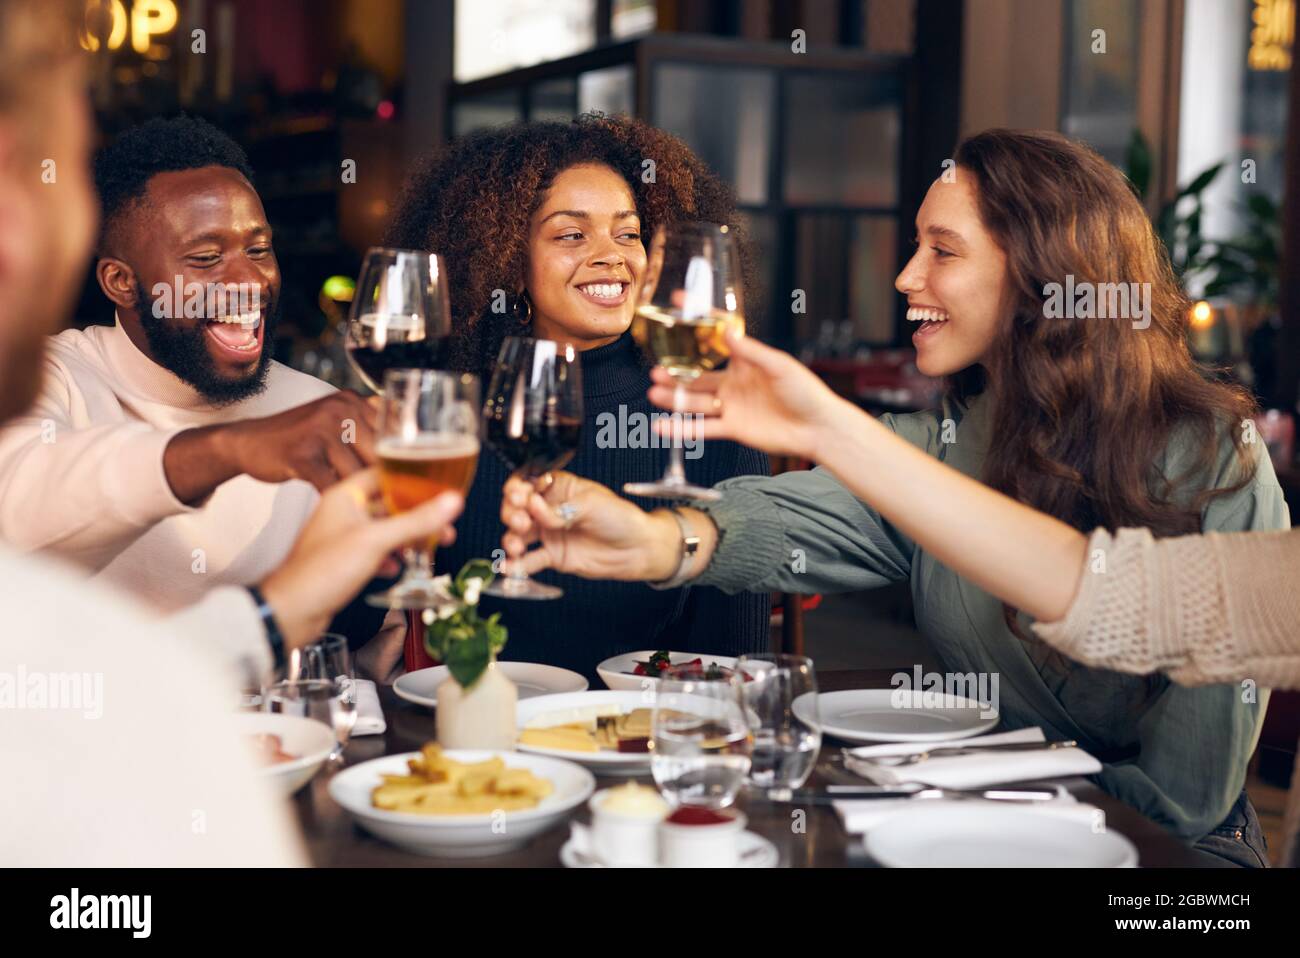 Friends raising glasses in restaurant Stock Photo